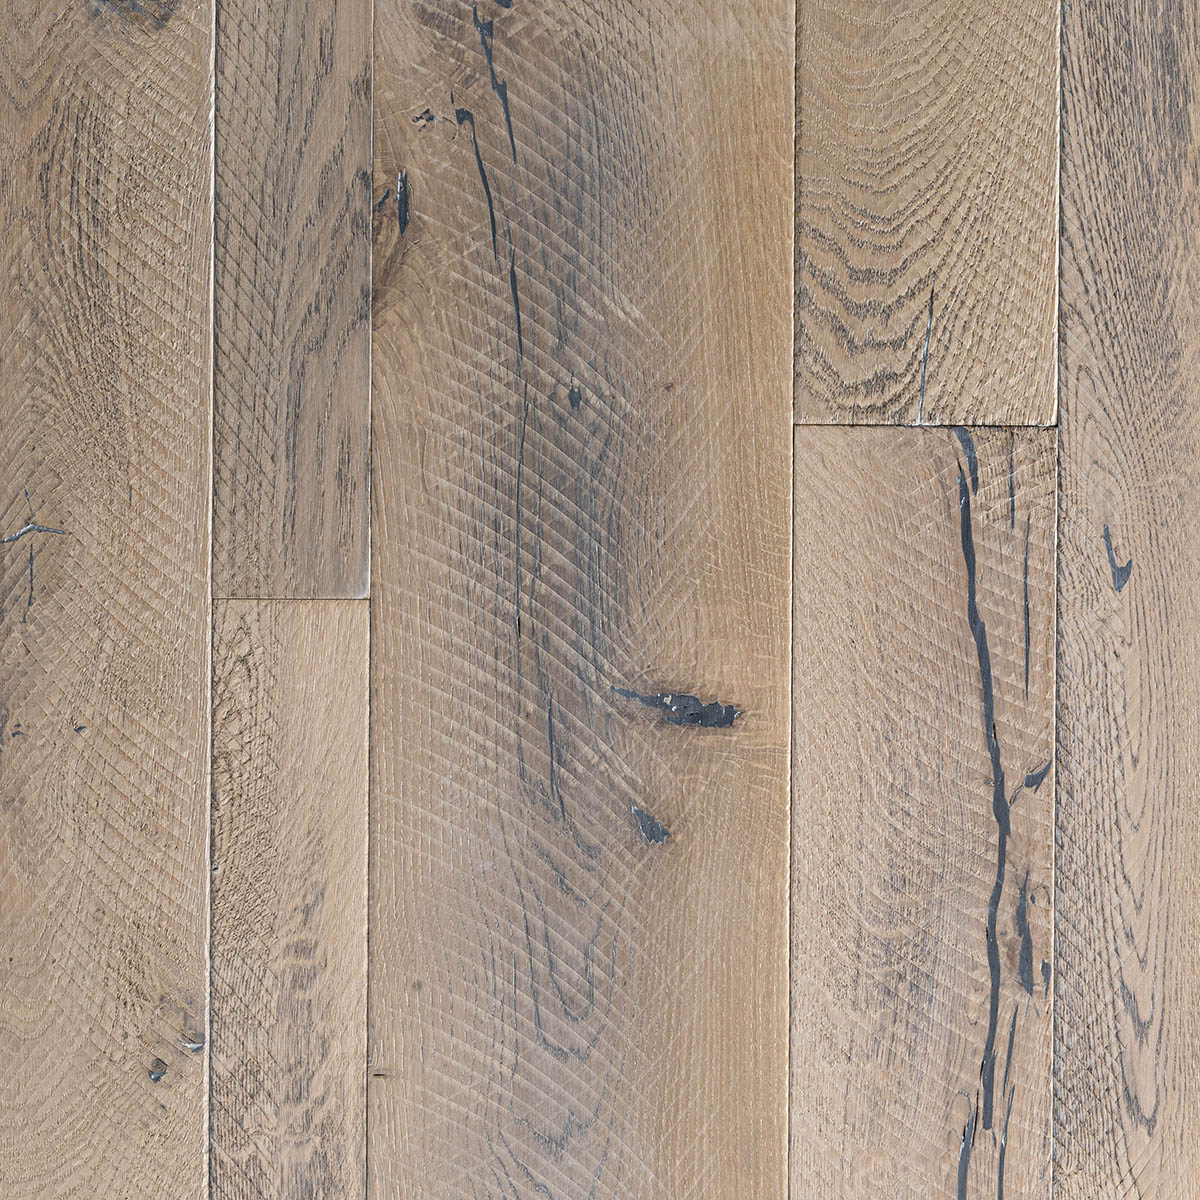 Thornbridge - Brushed, Distressed Mixed Width Oak Floor